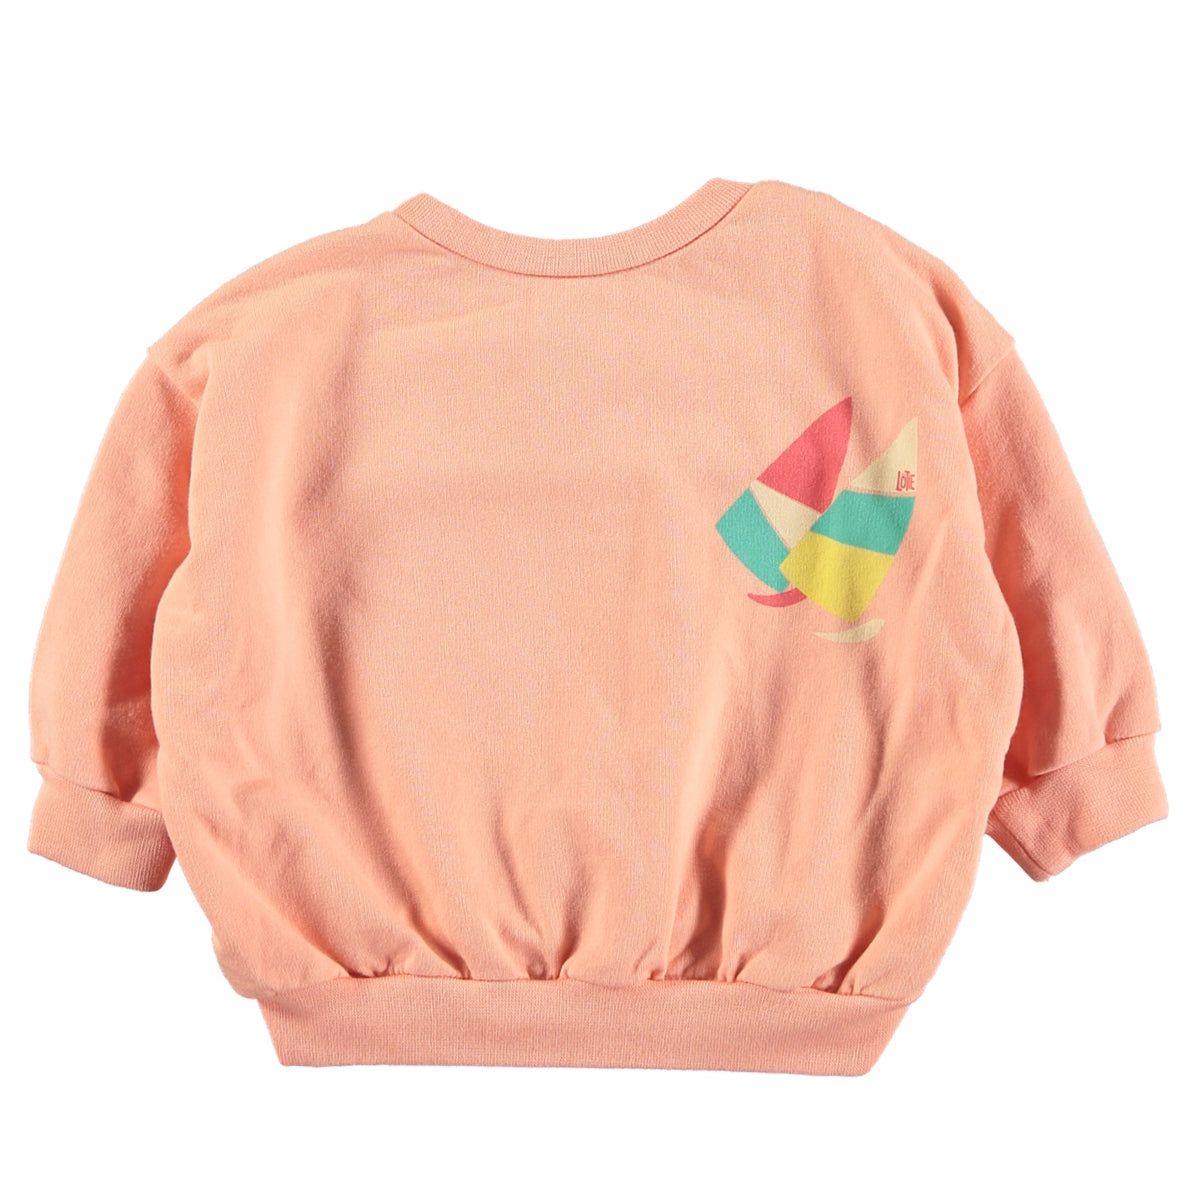 Lotie Kids - baby sweatshirt - windsurf - salmon rose